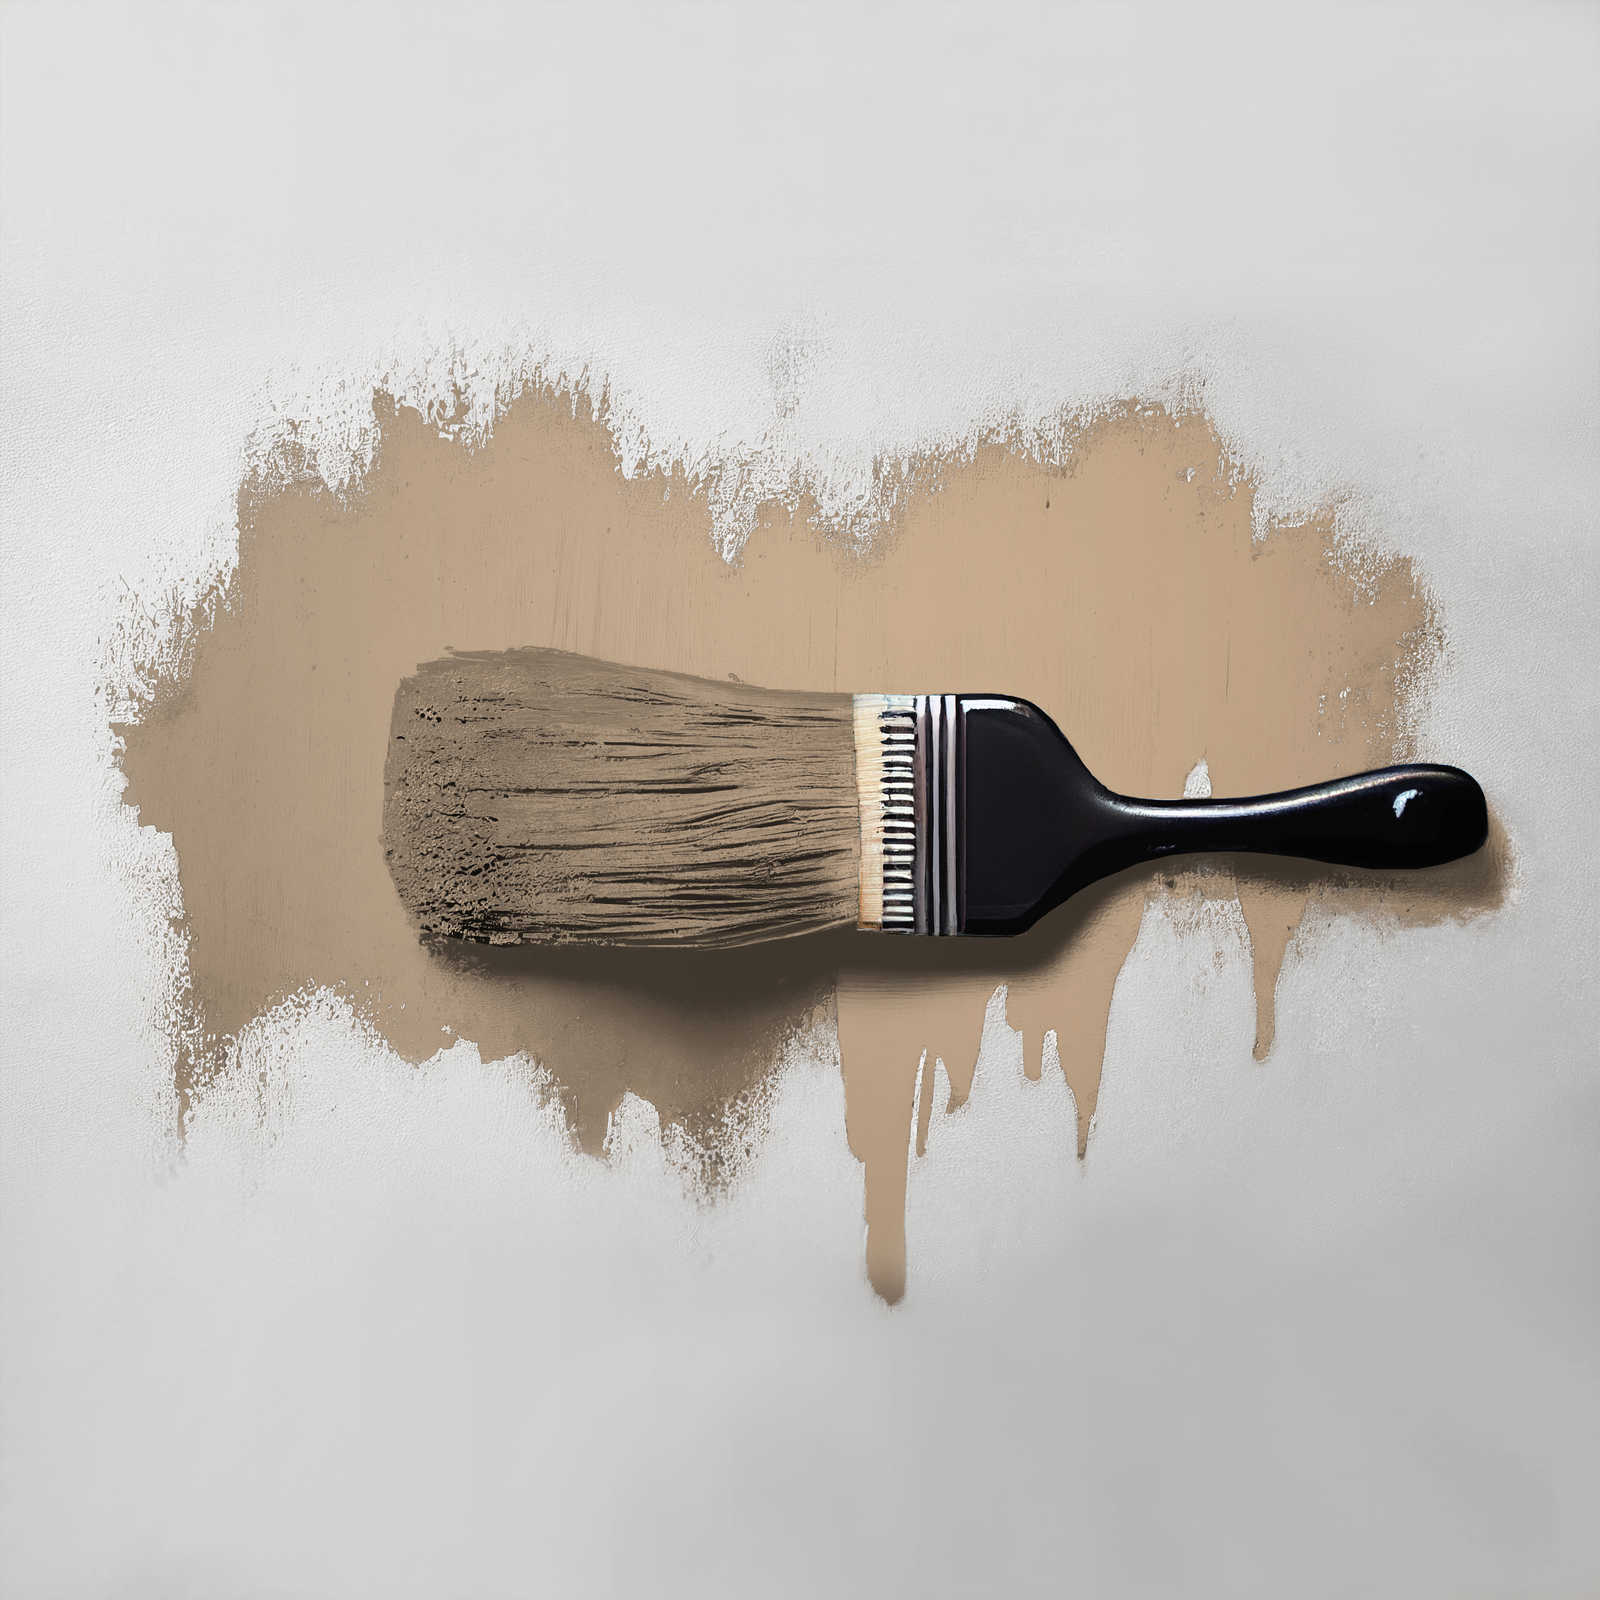             Wall Paint TCK6005 »Friendly Fennel« in homely beige brown – 2.5 litre
        